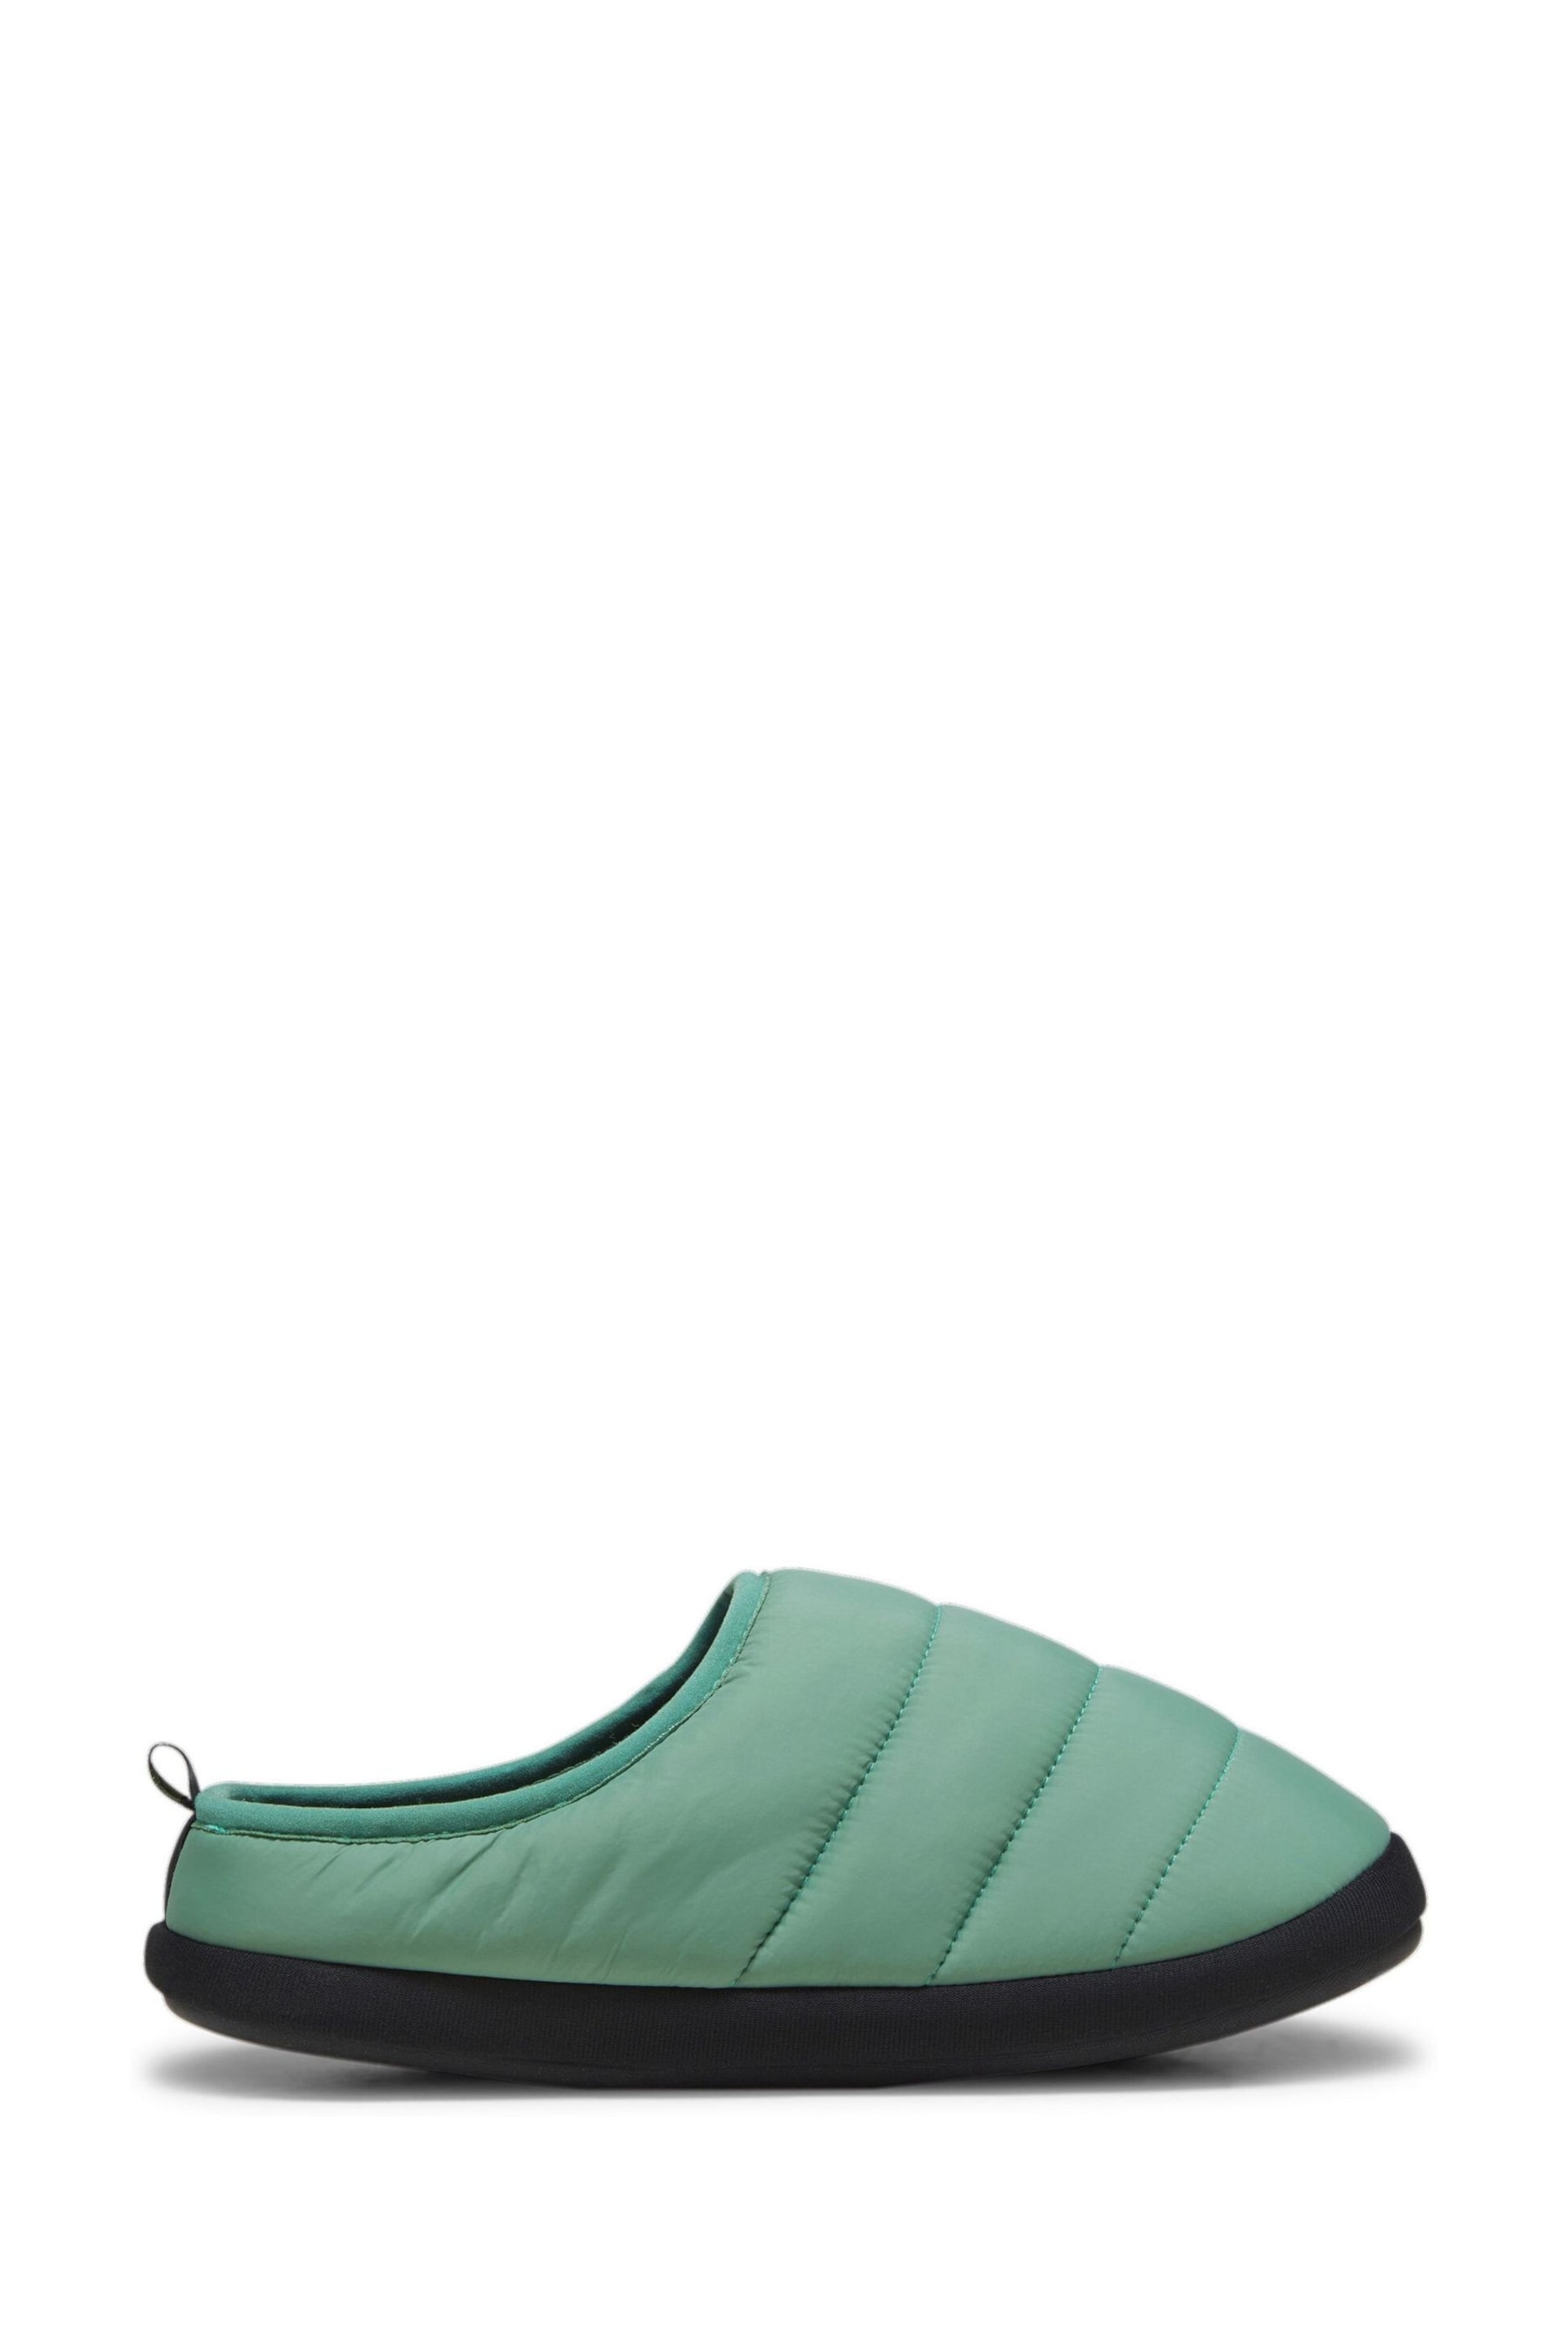 Puma Green Scuff Slippers - Image 1 of 7